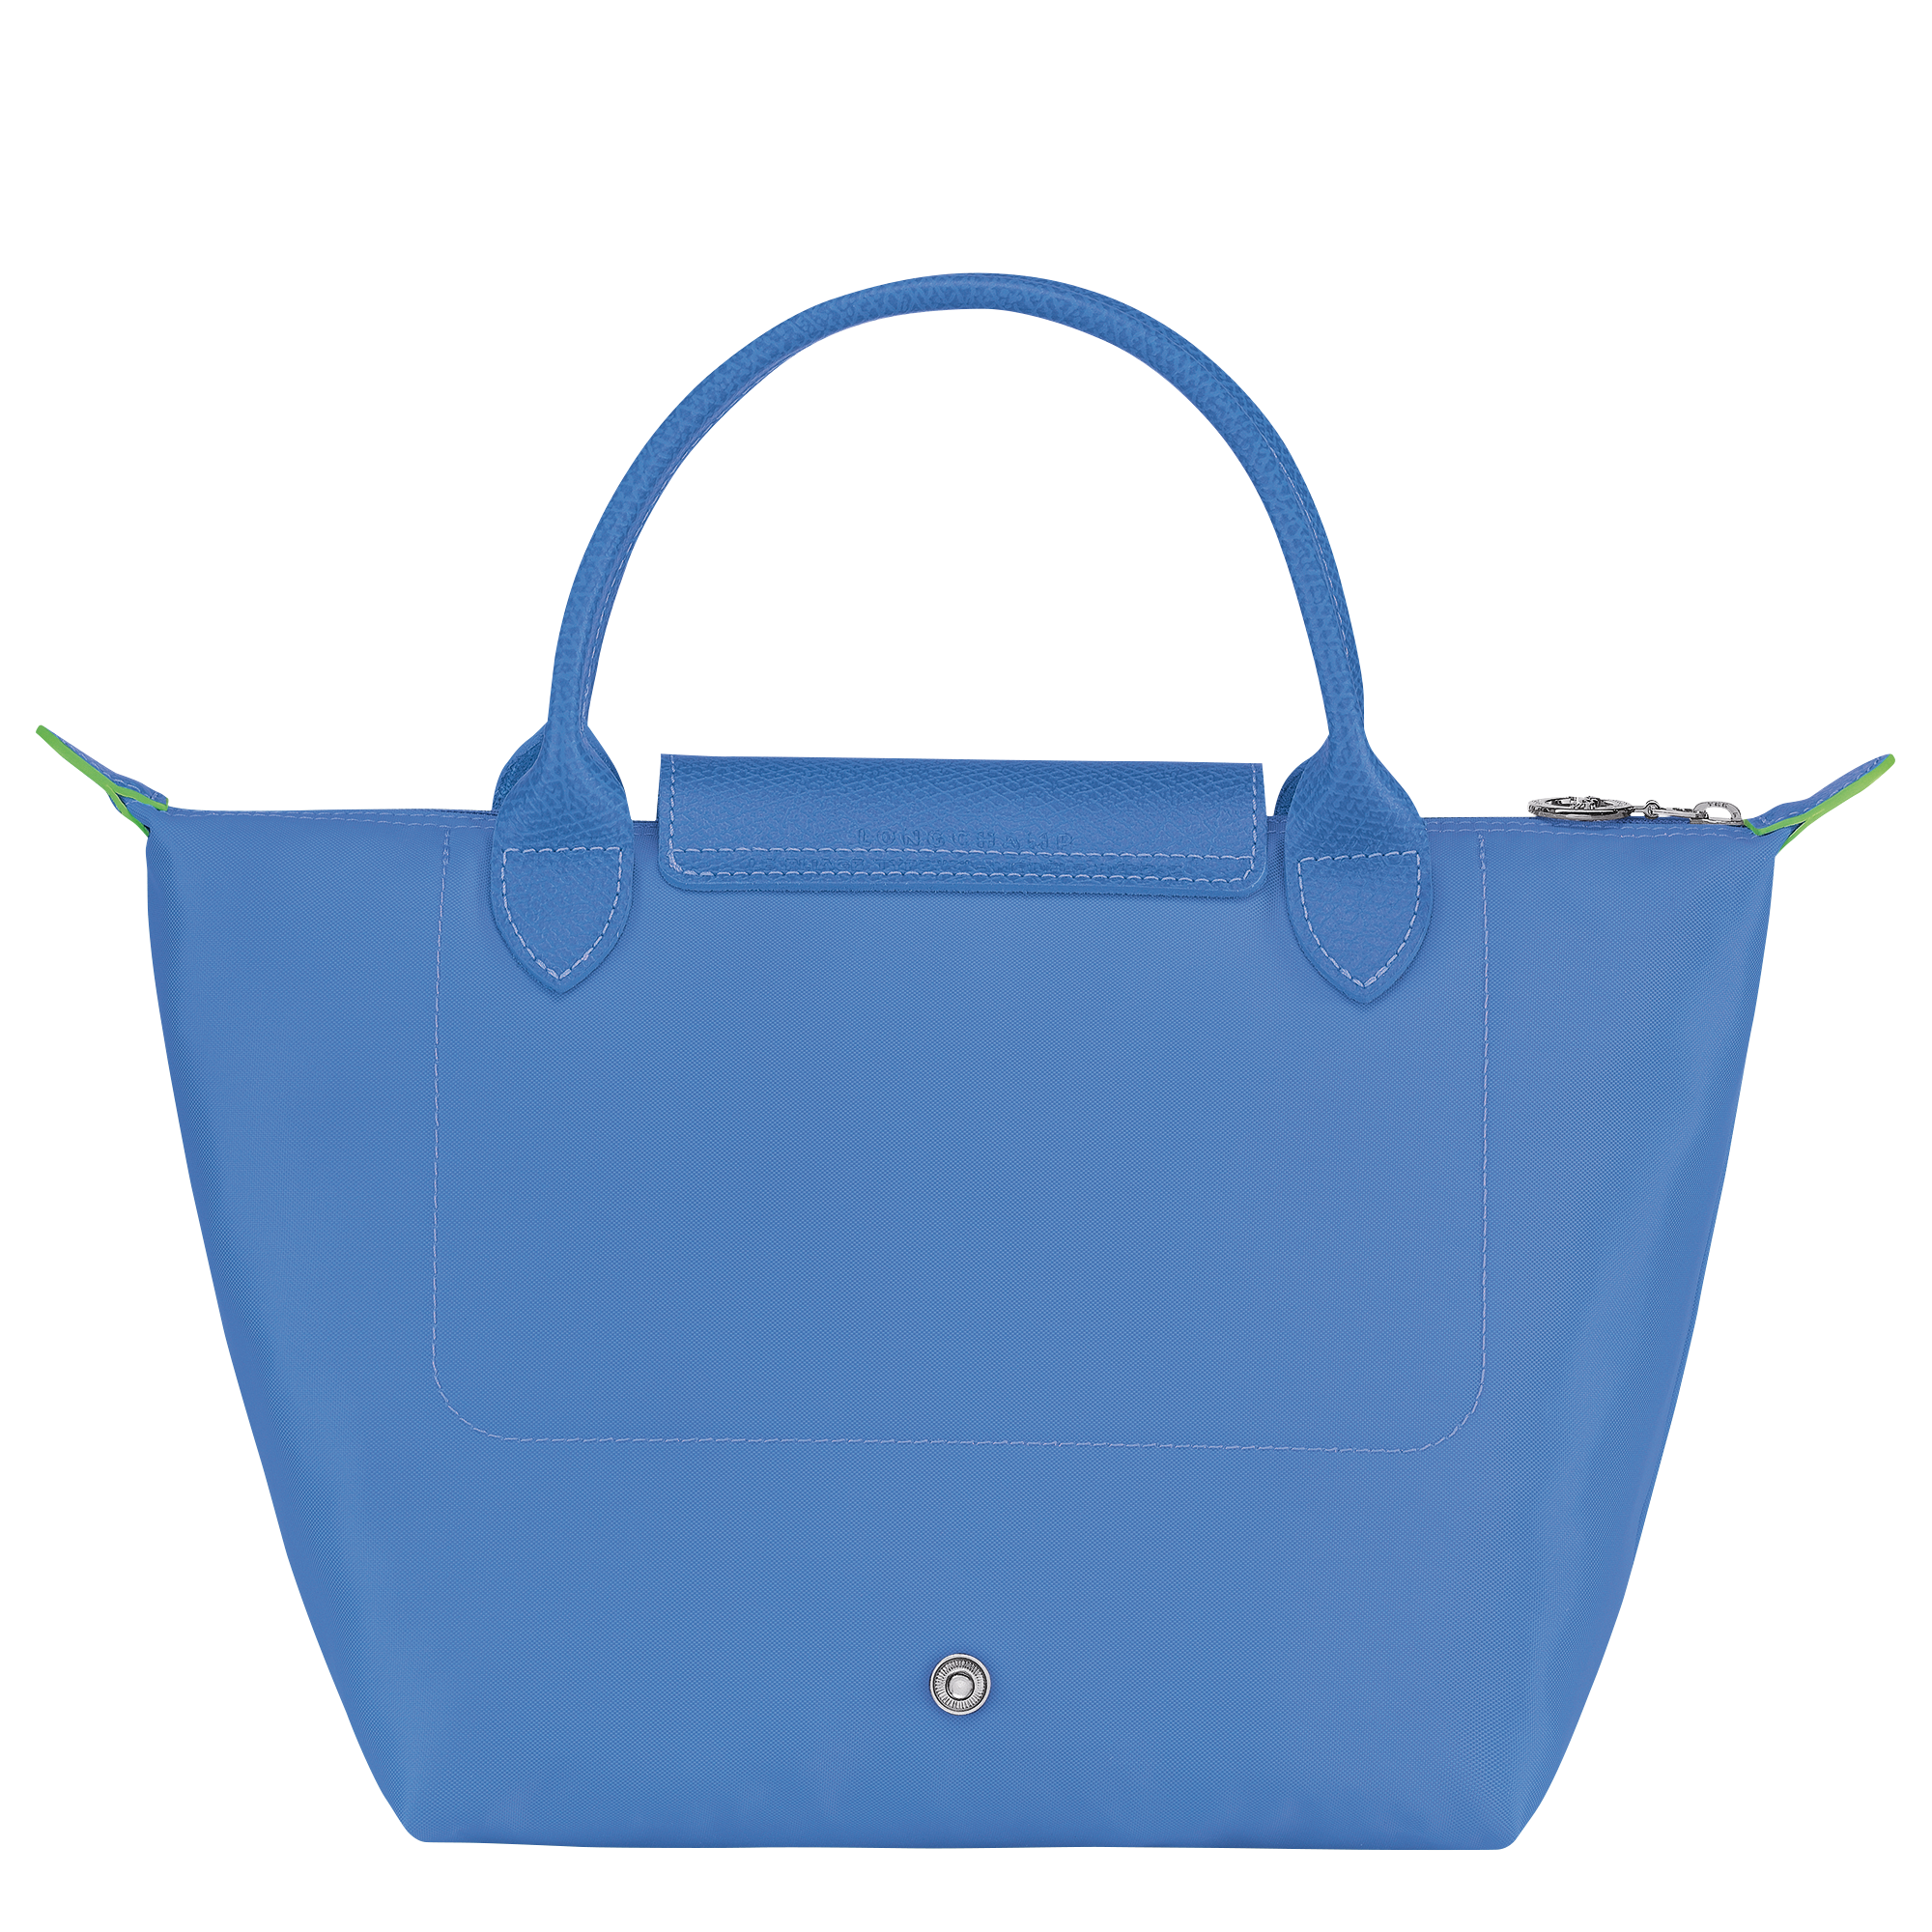 Le Pliage Green Handtasche S, Kornblumenblau